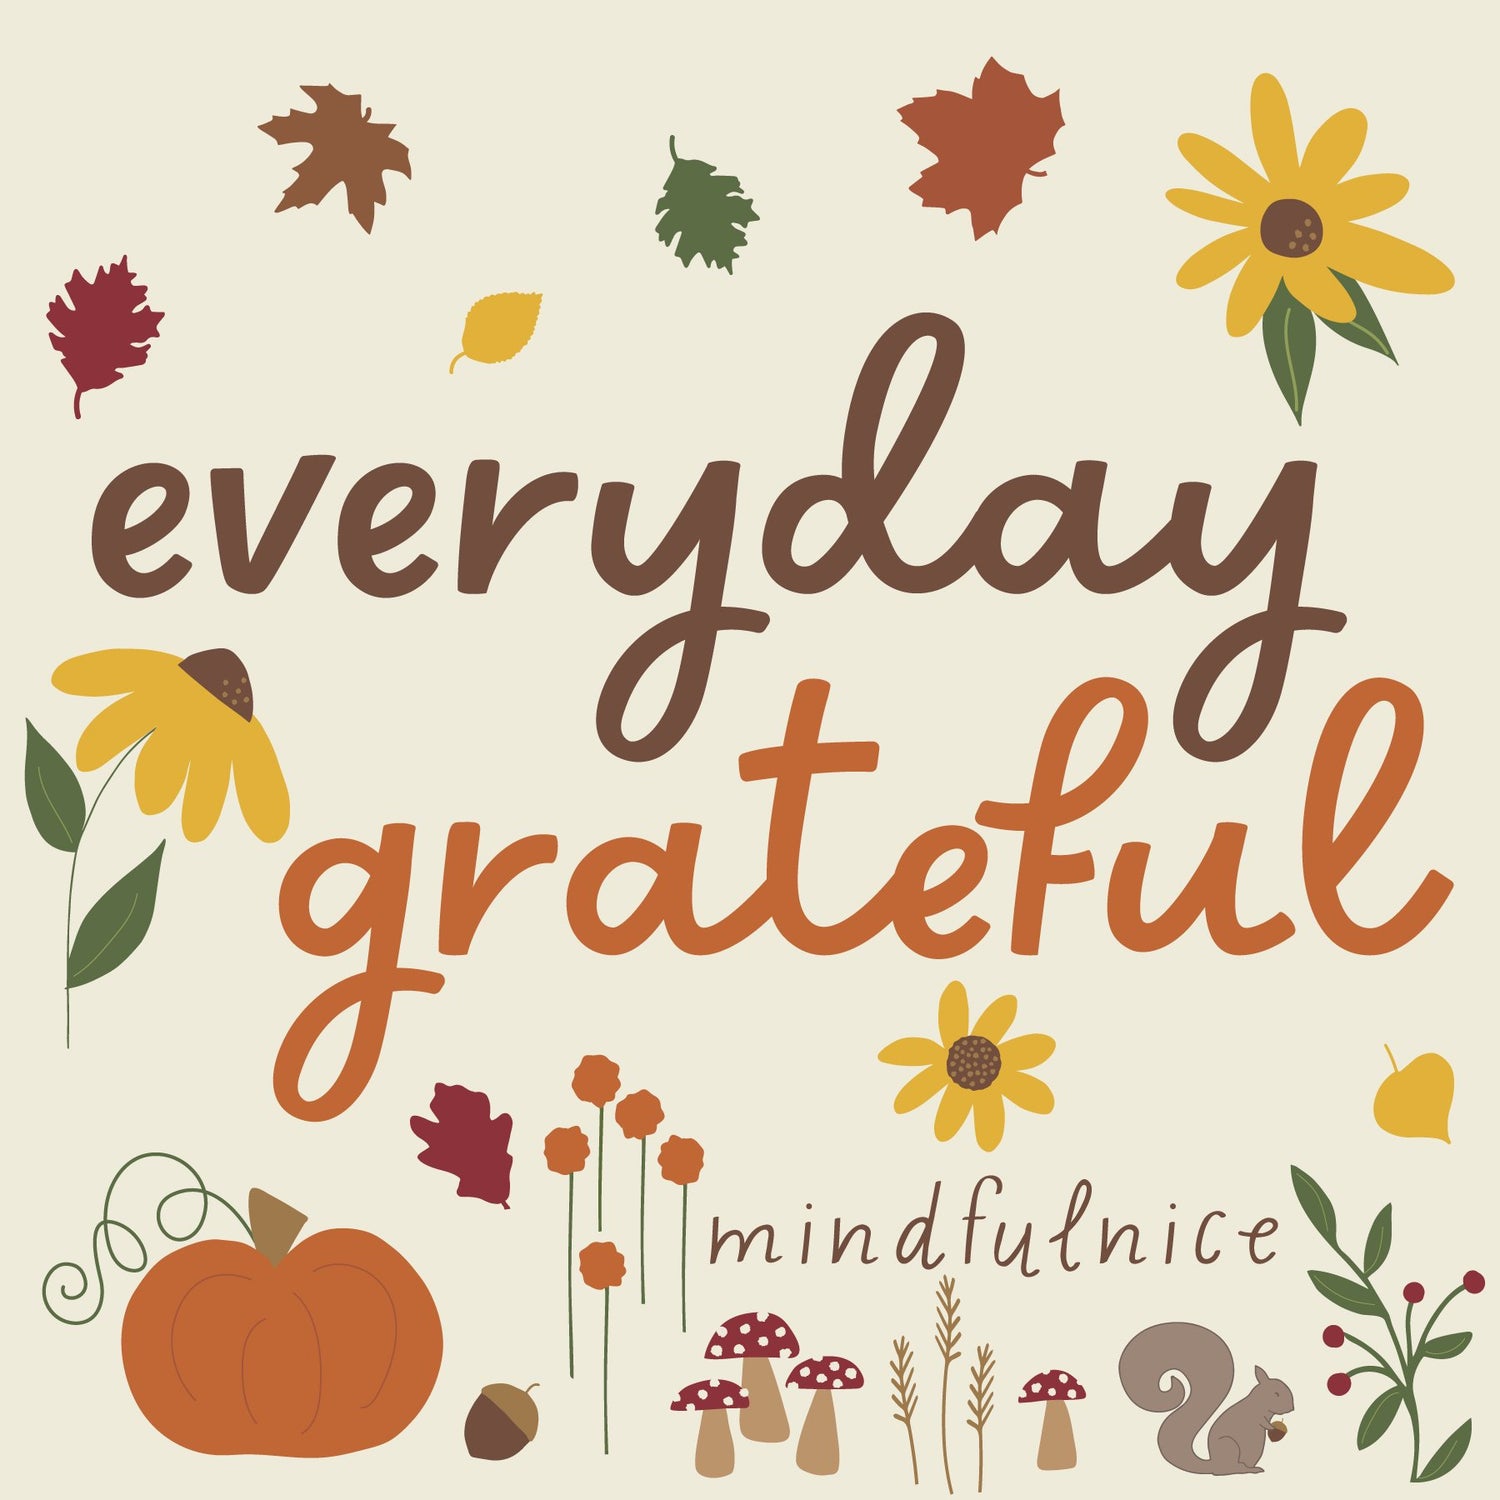 Everyday Grateful